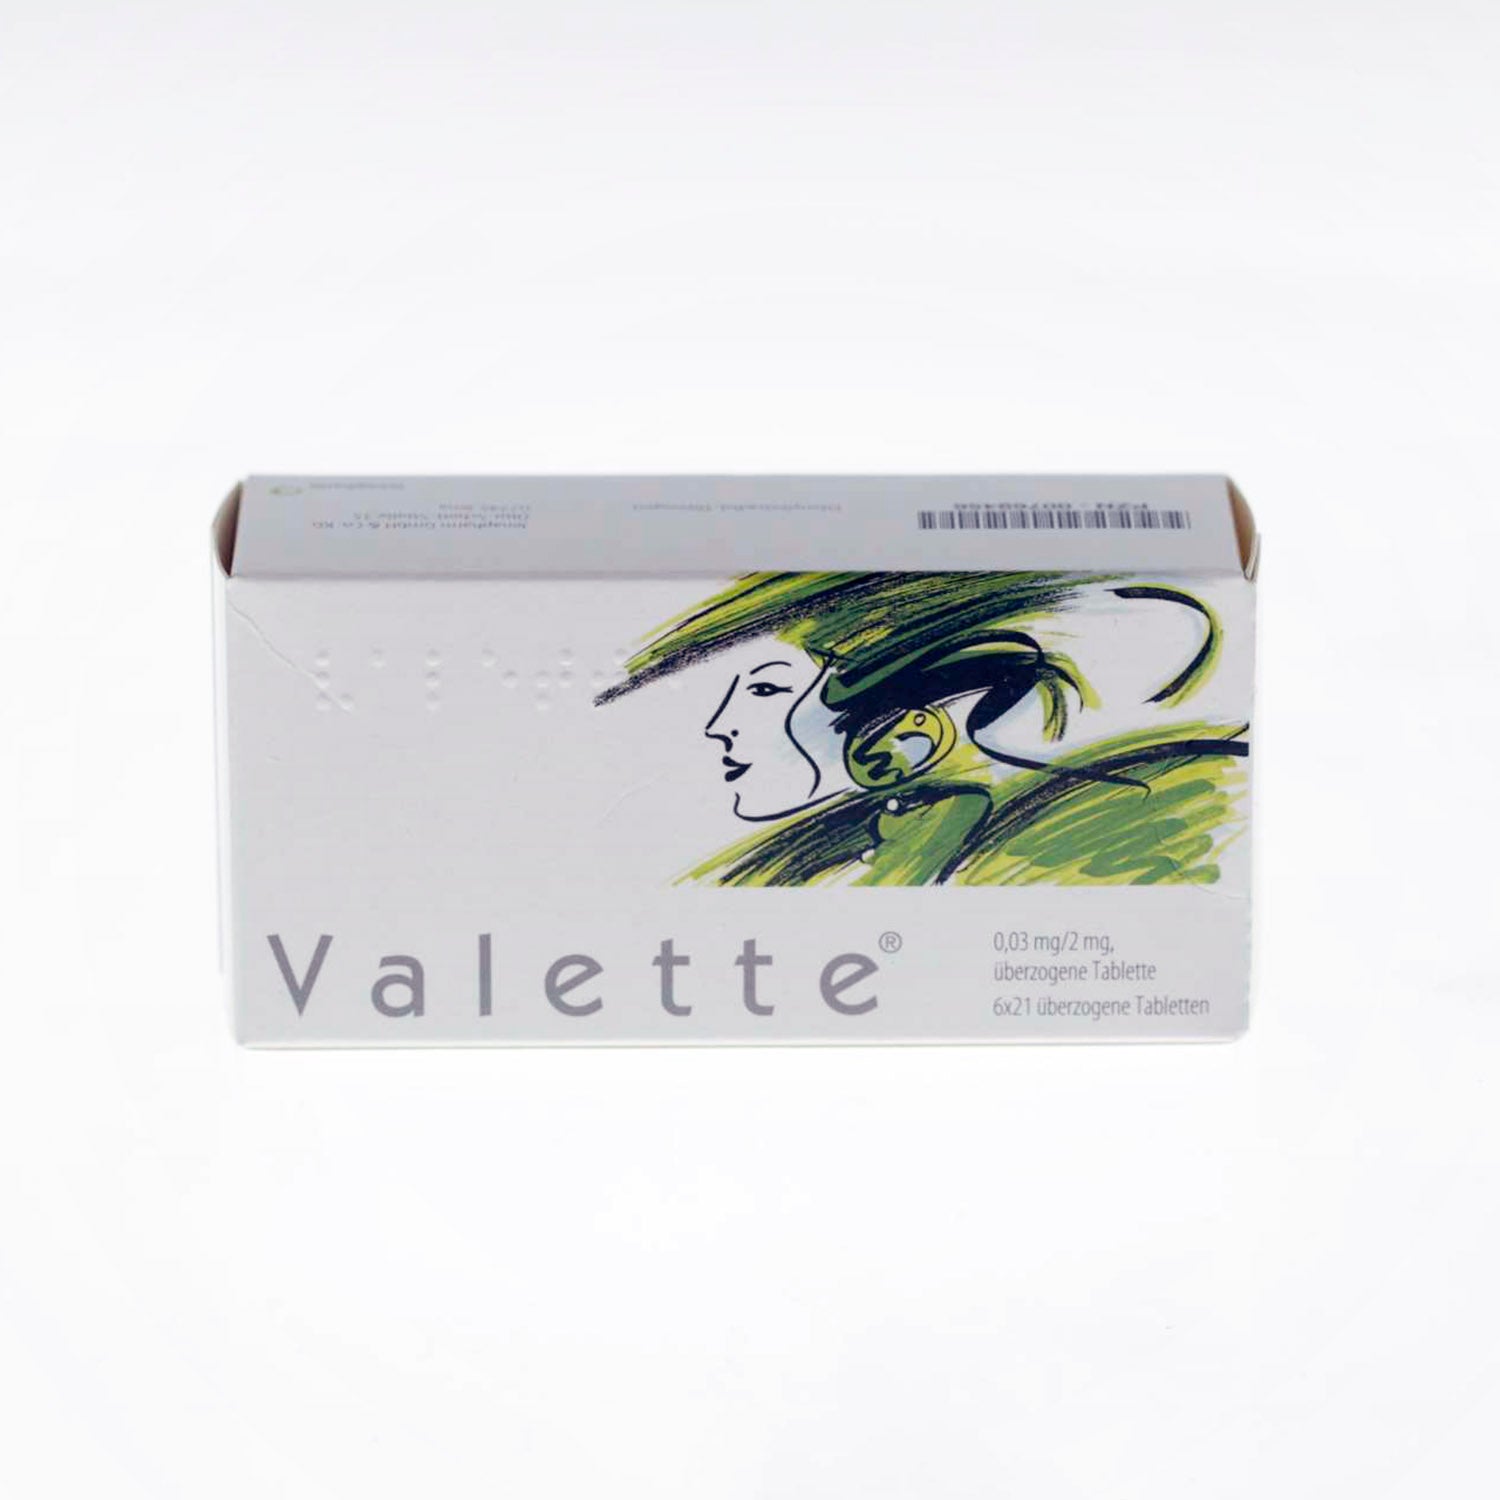 Valette 0.03mg/2.0mg